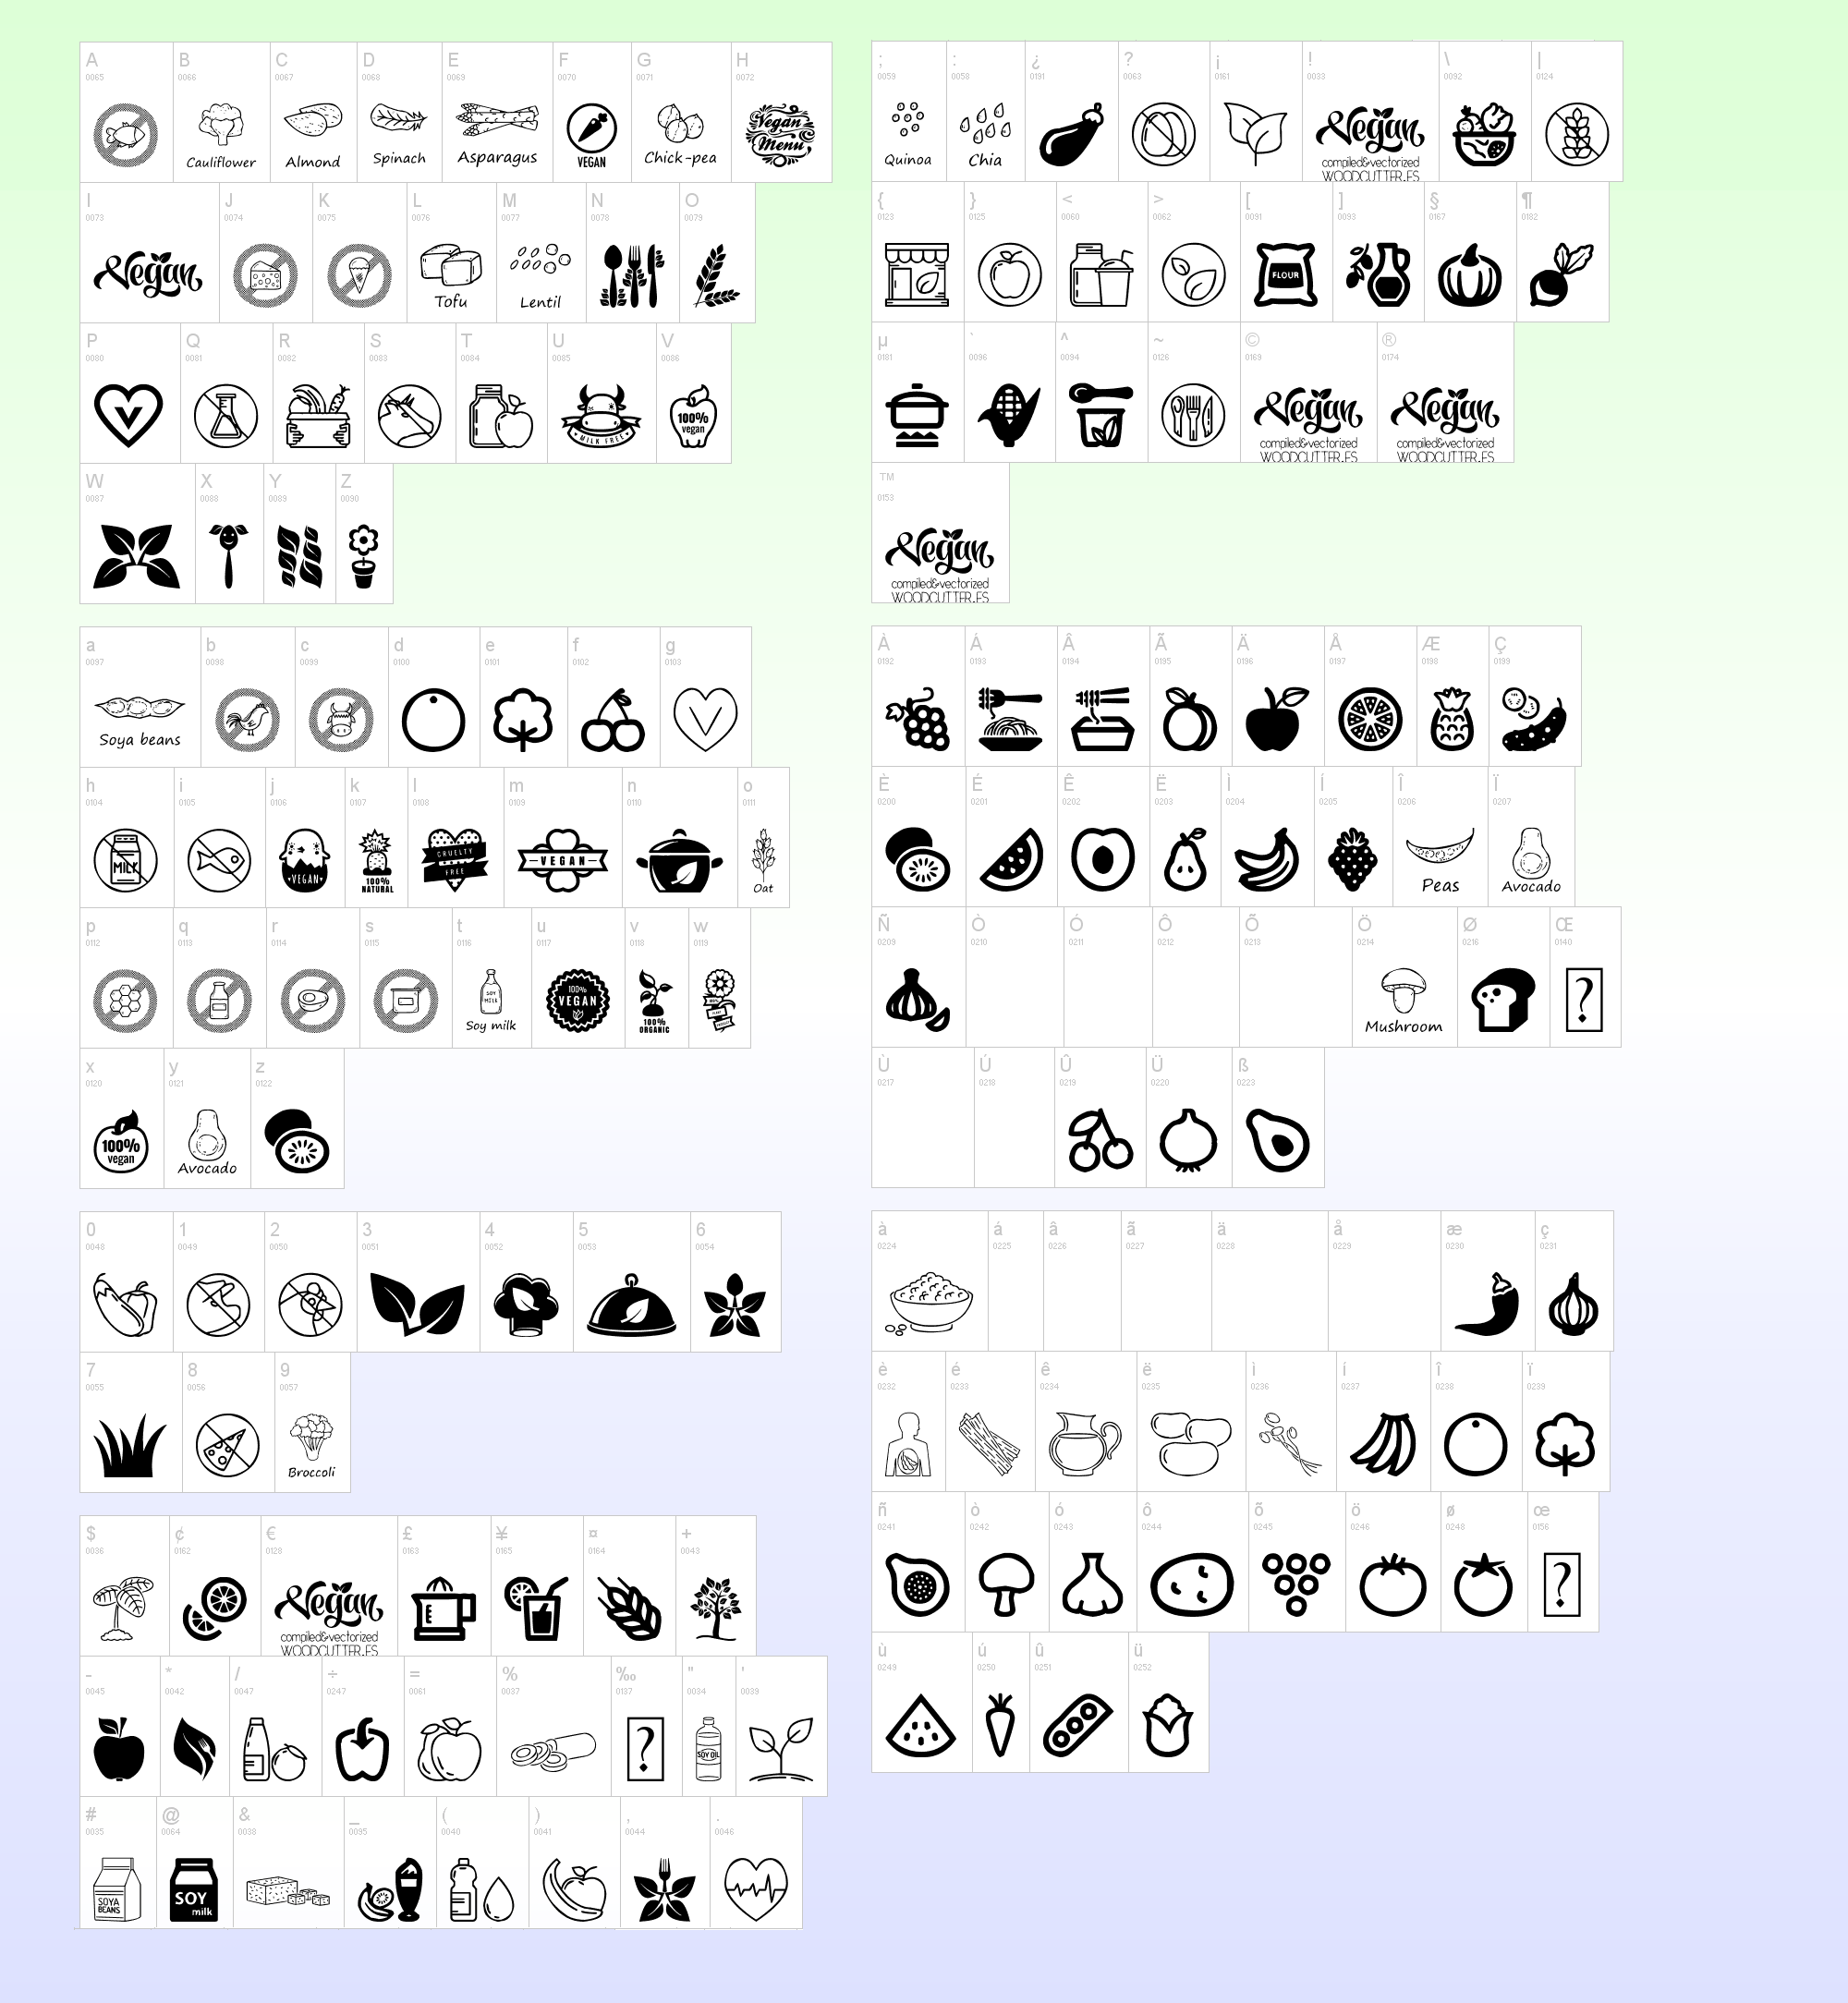 Paste emoji black and white copy Crown Symbols